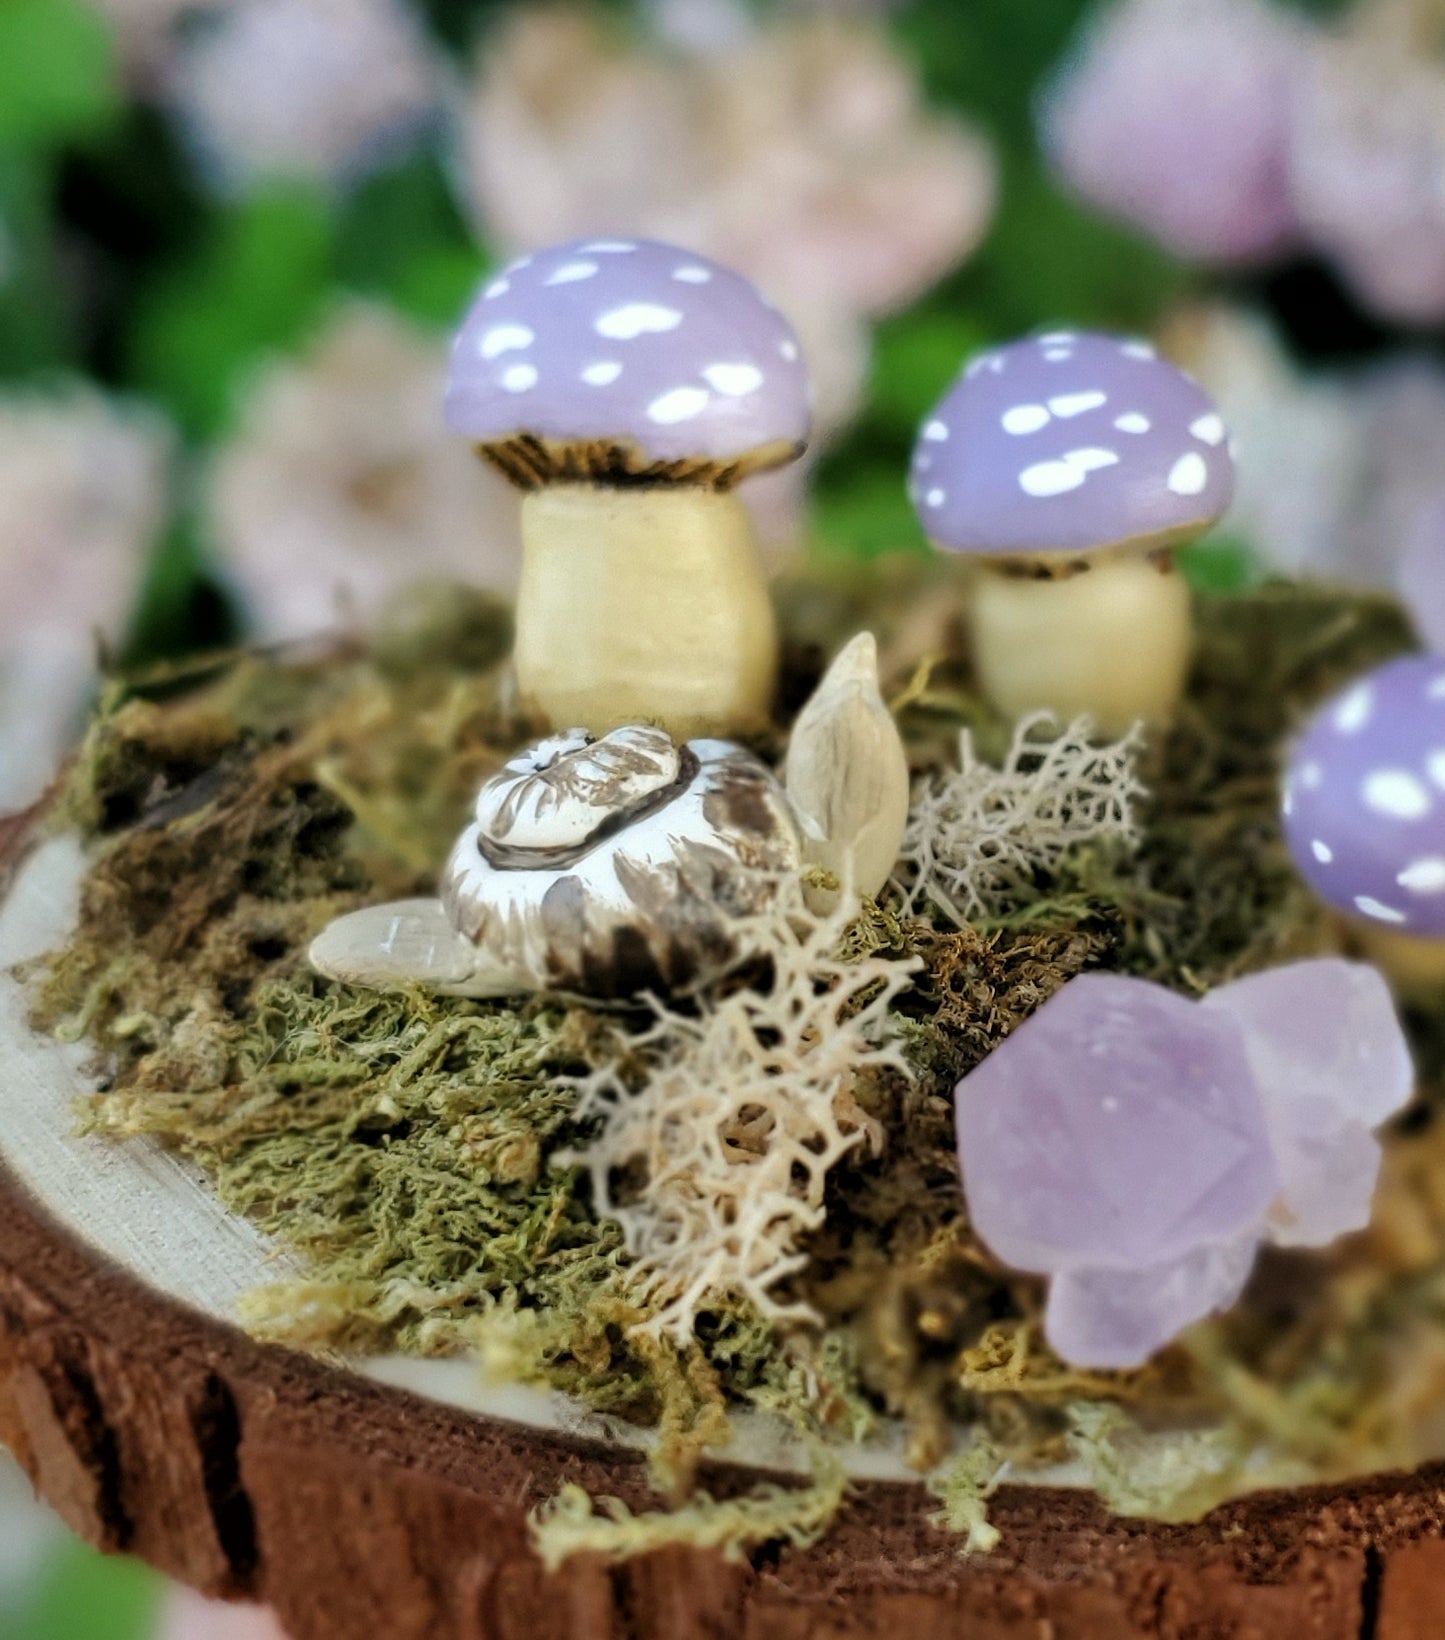 Purple Fungi Sculpture Decoration